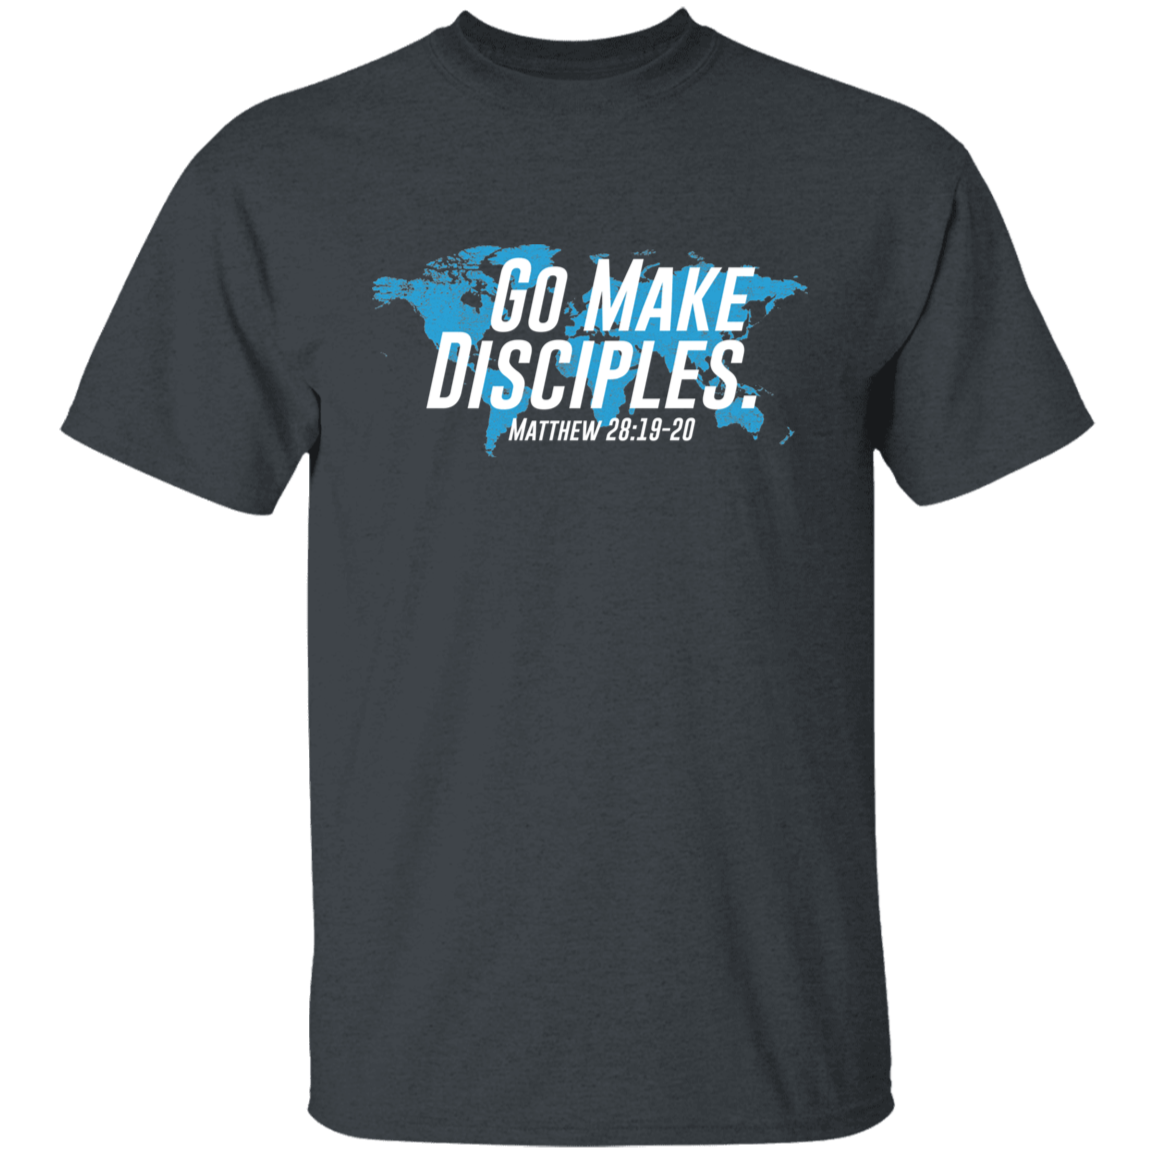 YOUTH - Make Disciples - Class T-Shirt